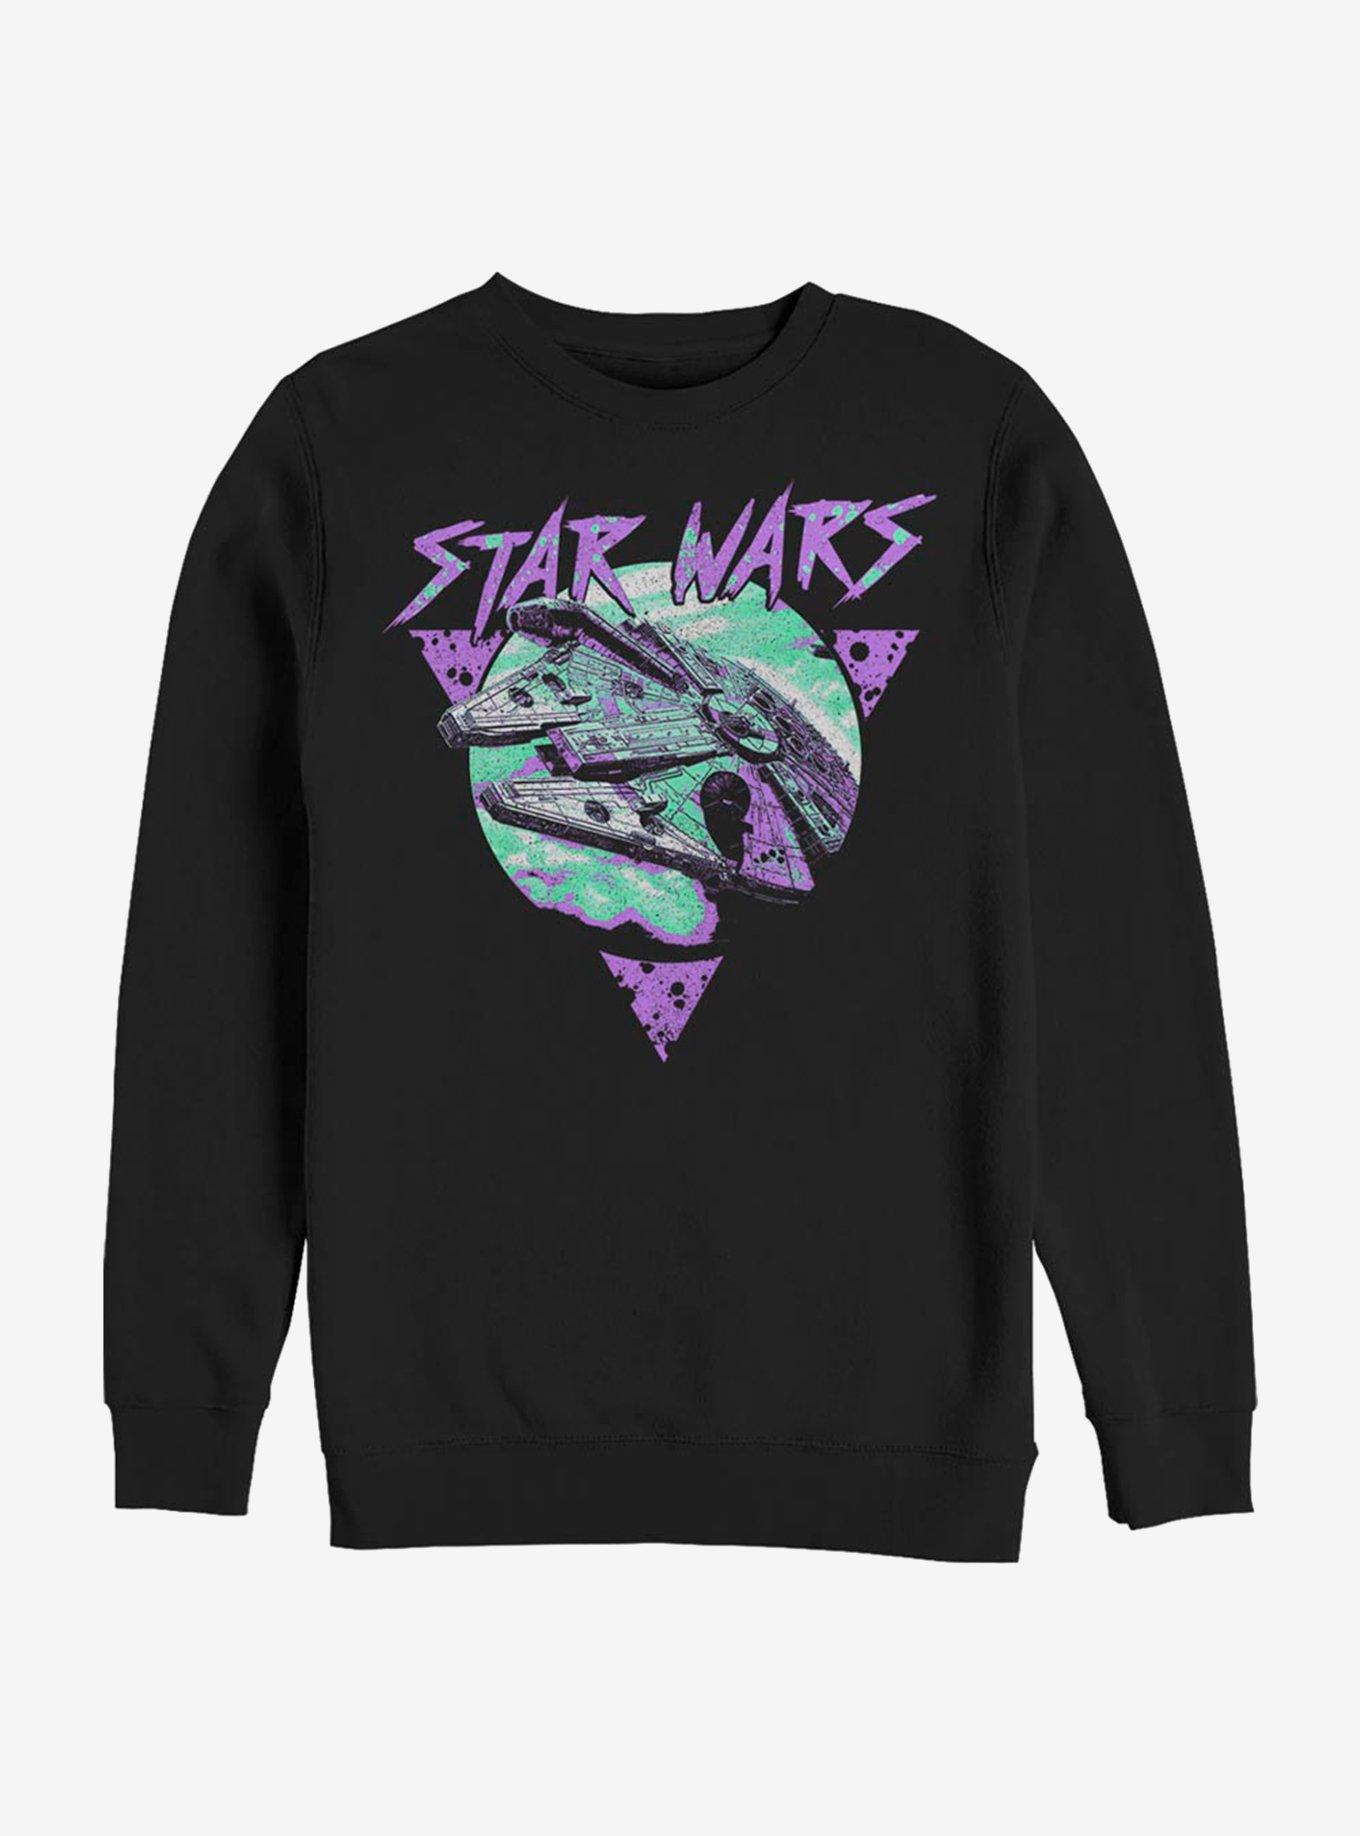 Star Wars New Wave Falcon Sweatshirt, BLACK, hi-res